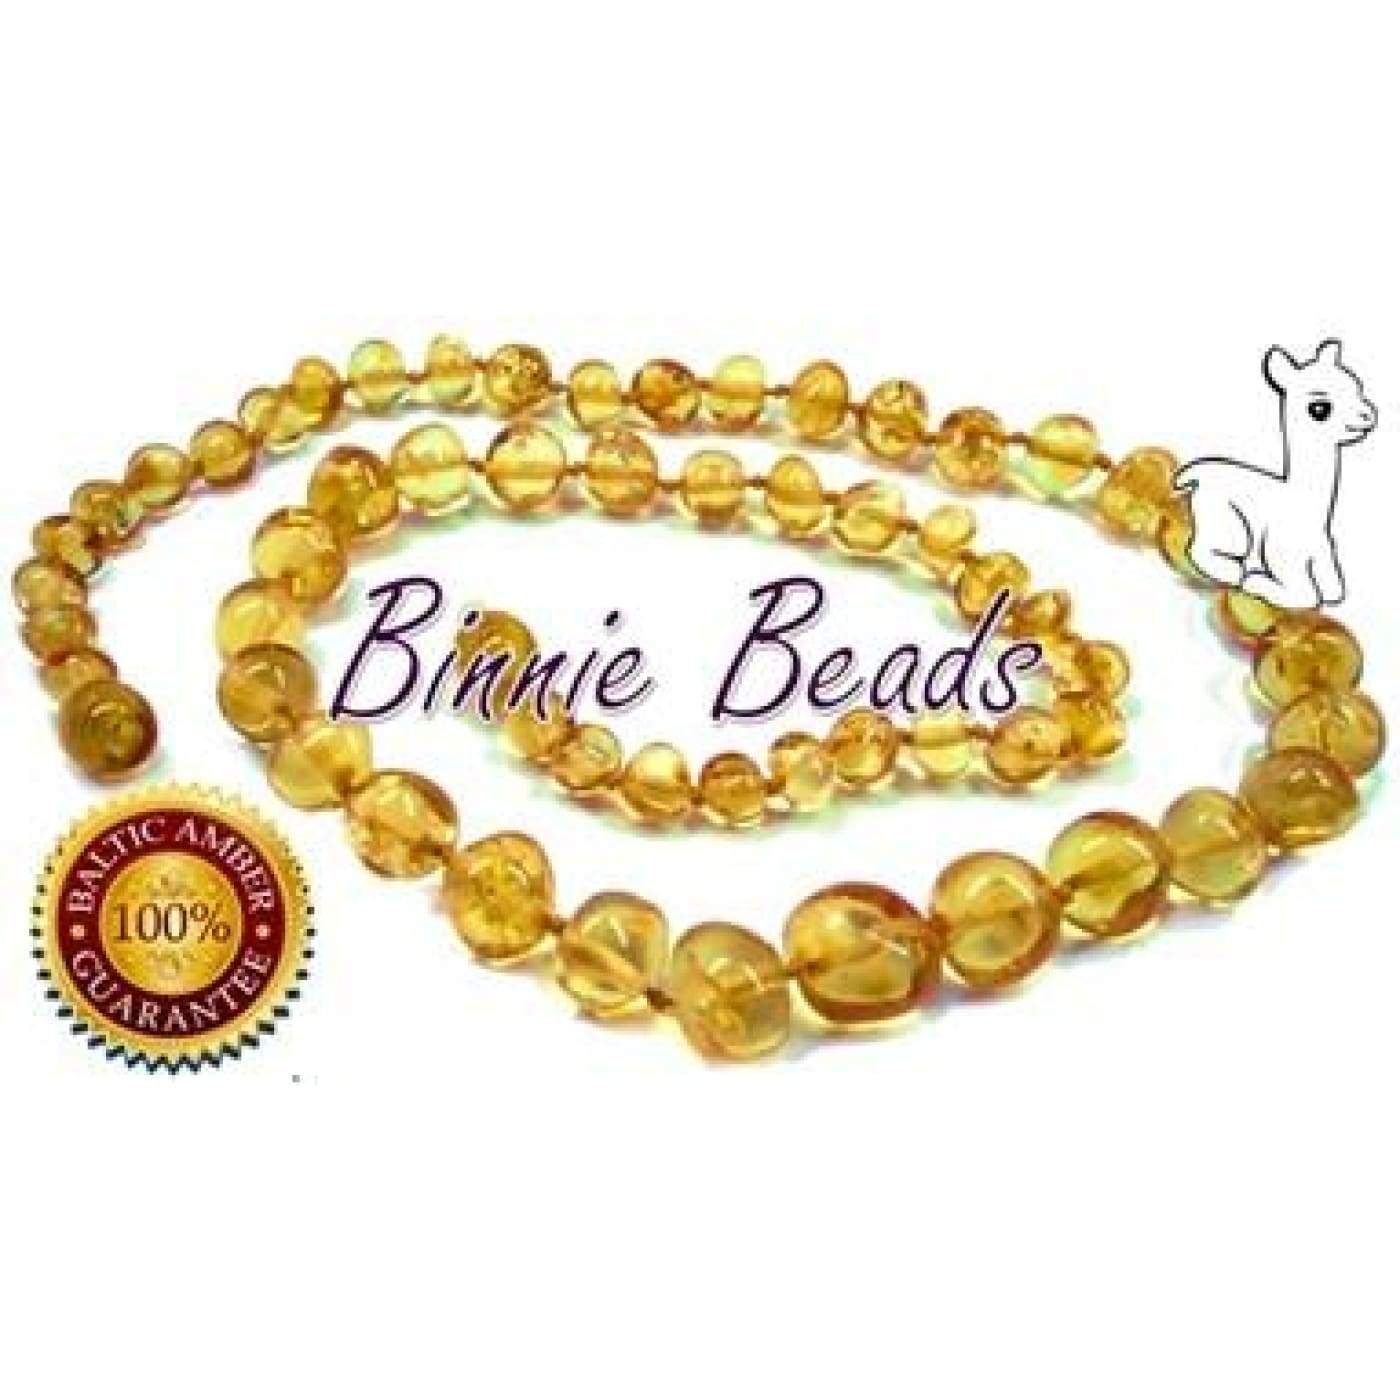 Binnie Baltic Amber Child Necklace - Lemon 36CM - NURSING & FEEDING - TEETHERS/TEETHING JEWELLERY